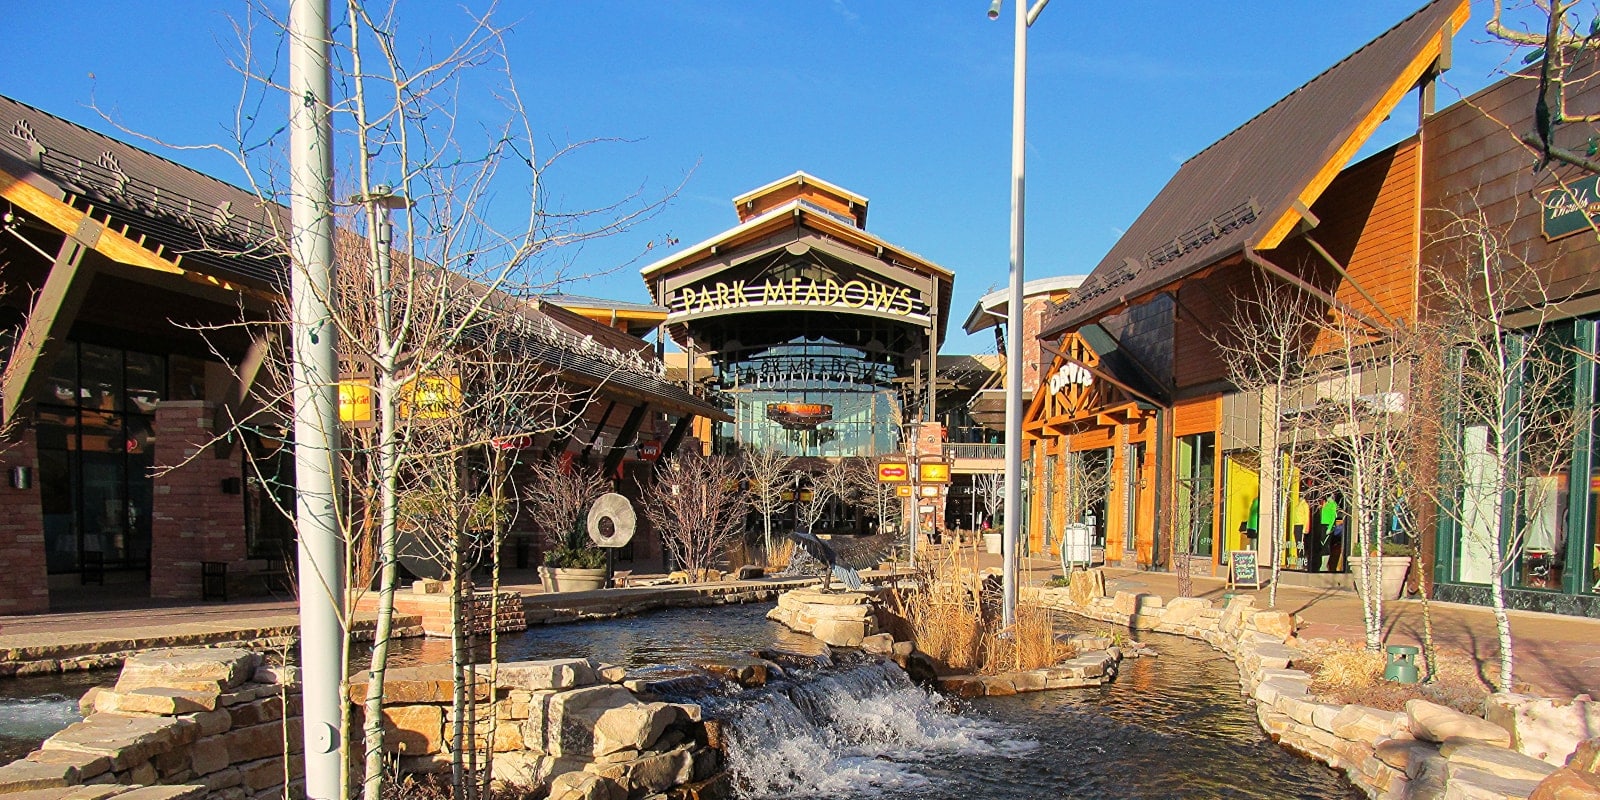 Park Meadows: Resort Amenities, Retail Excellence - Denver South